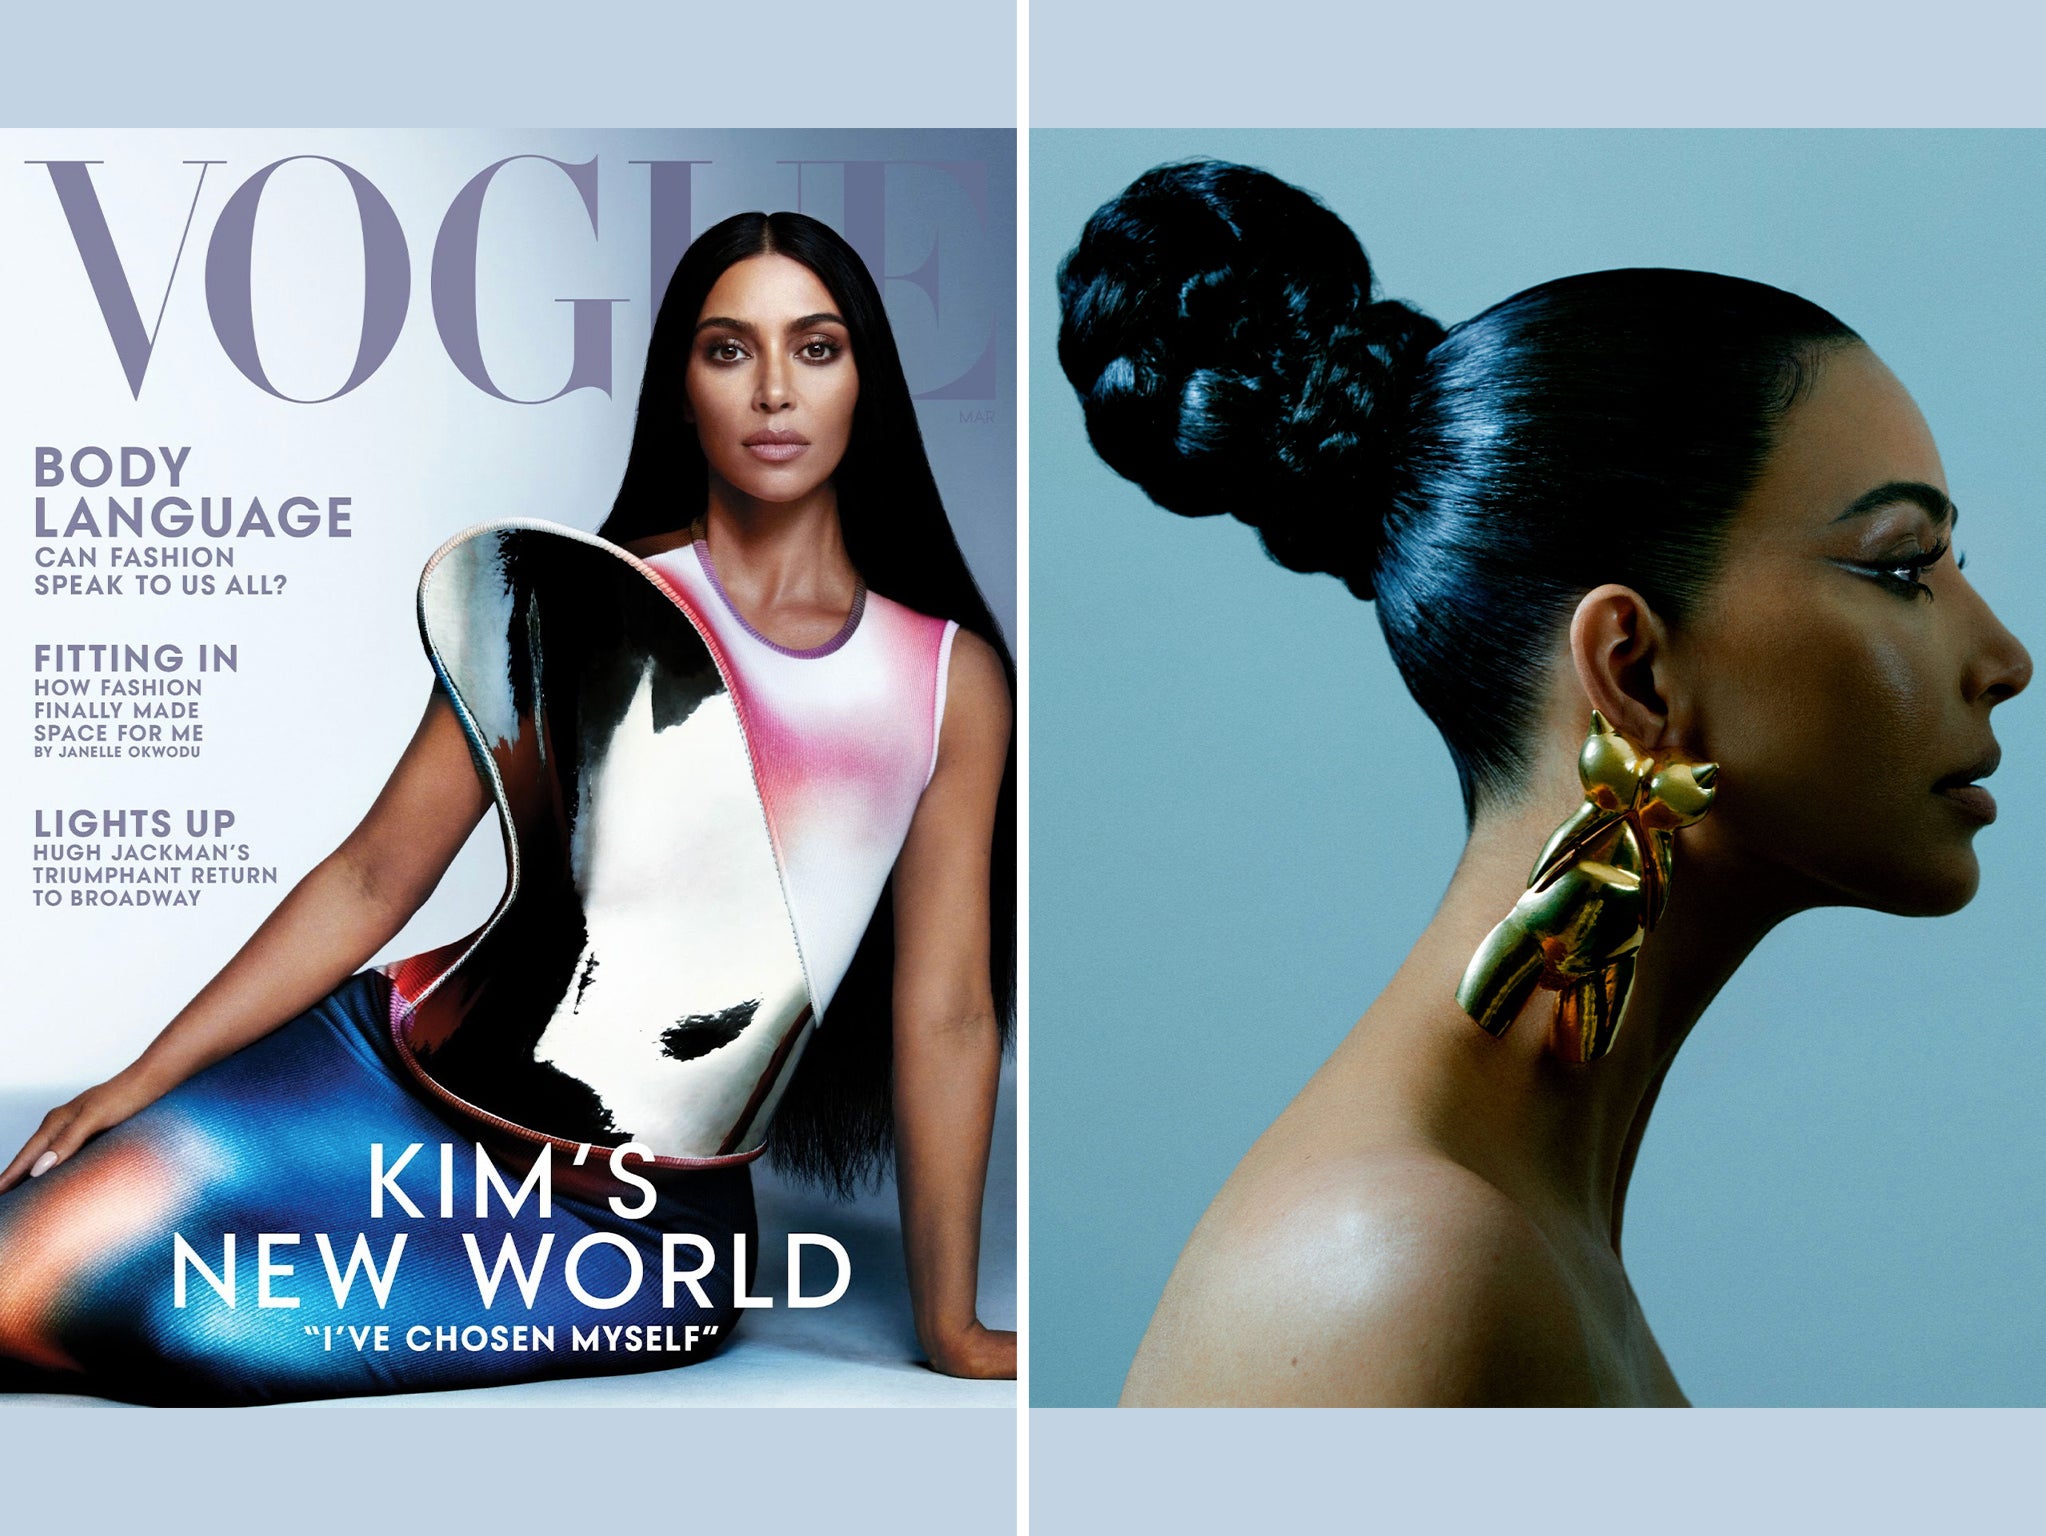 Kim Kardashian covers American Vogue March issue